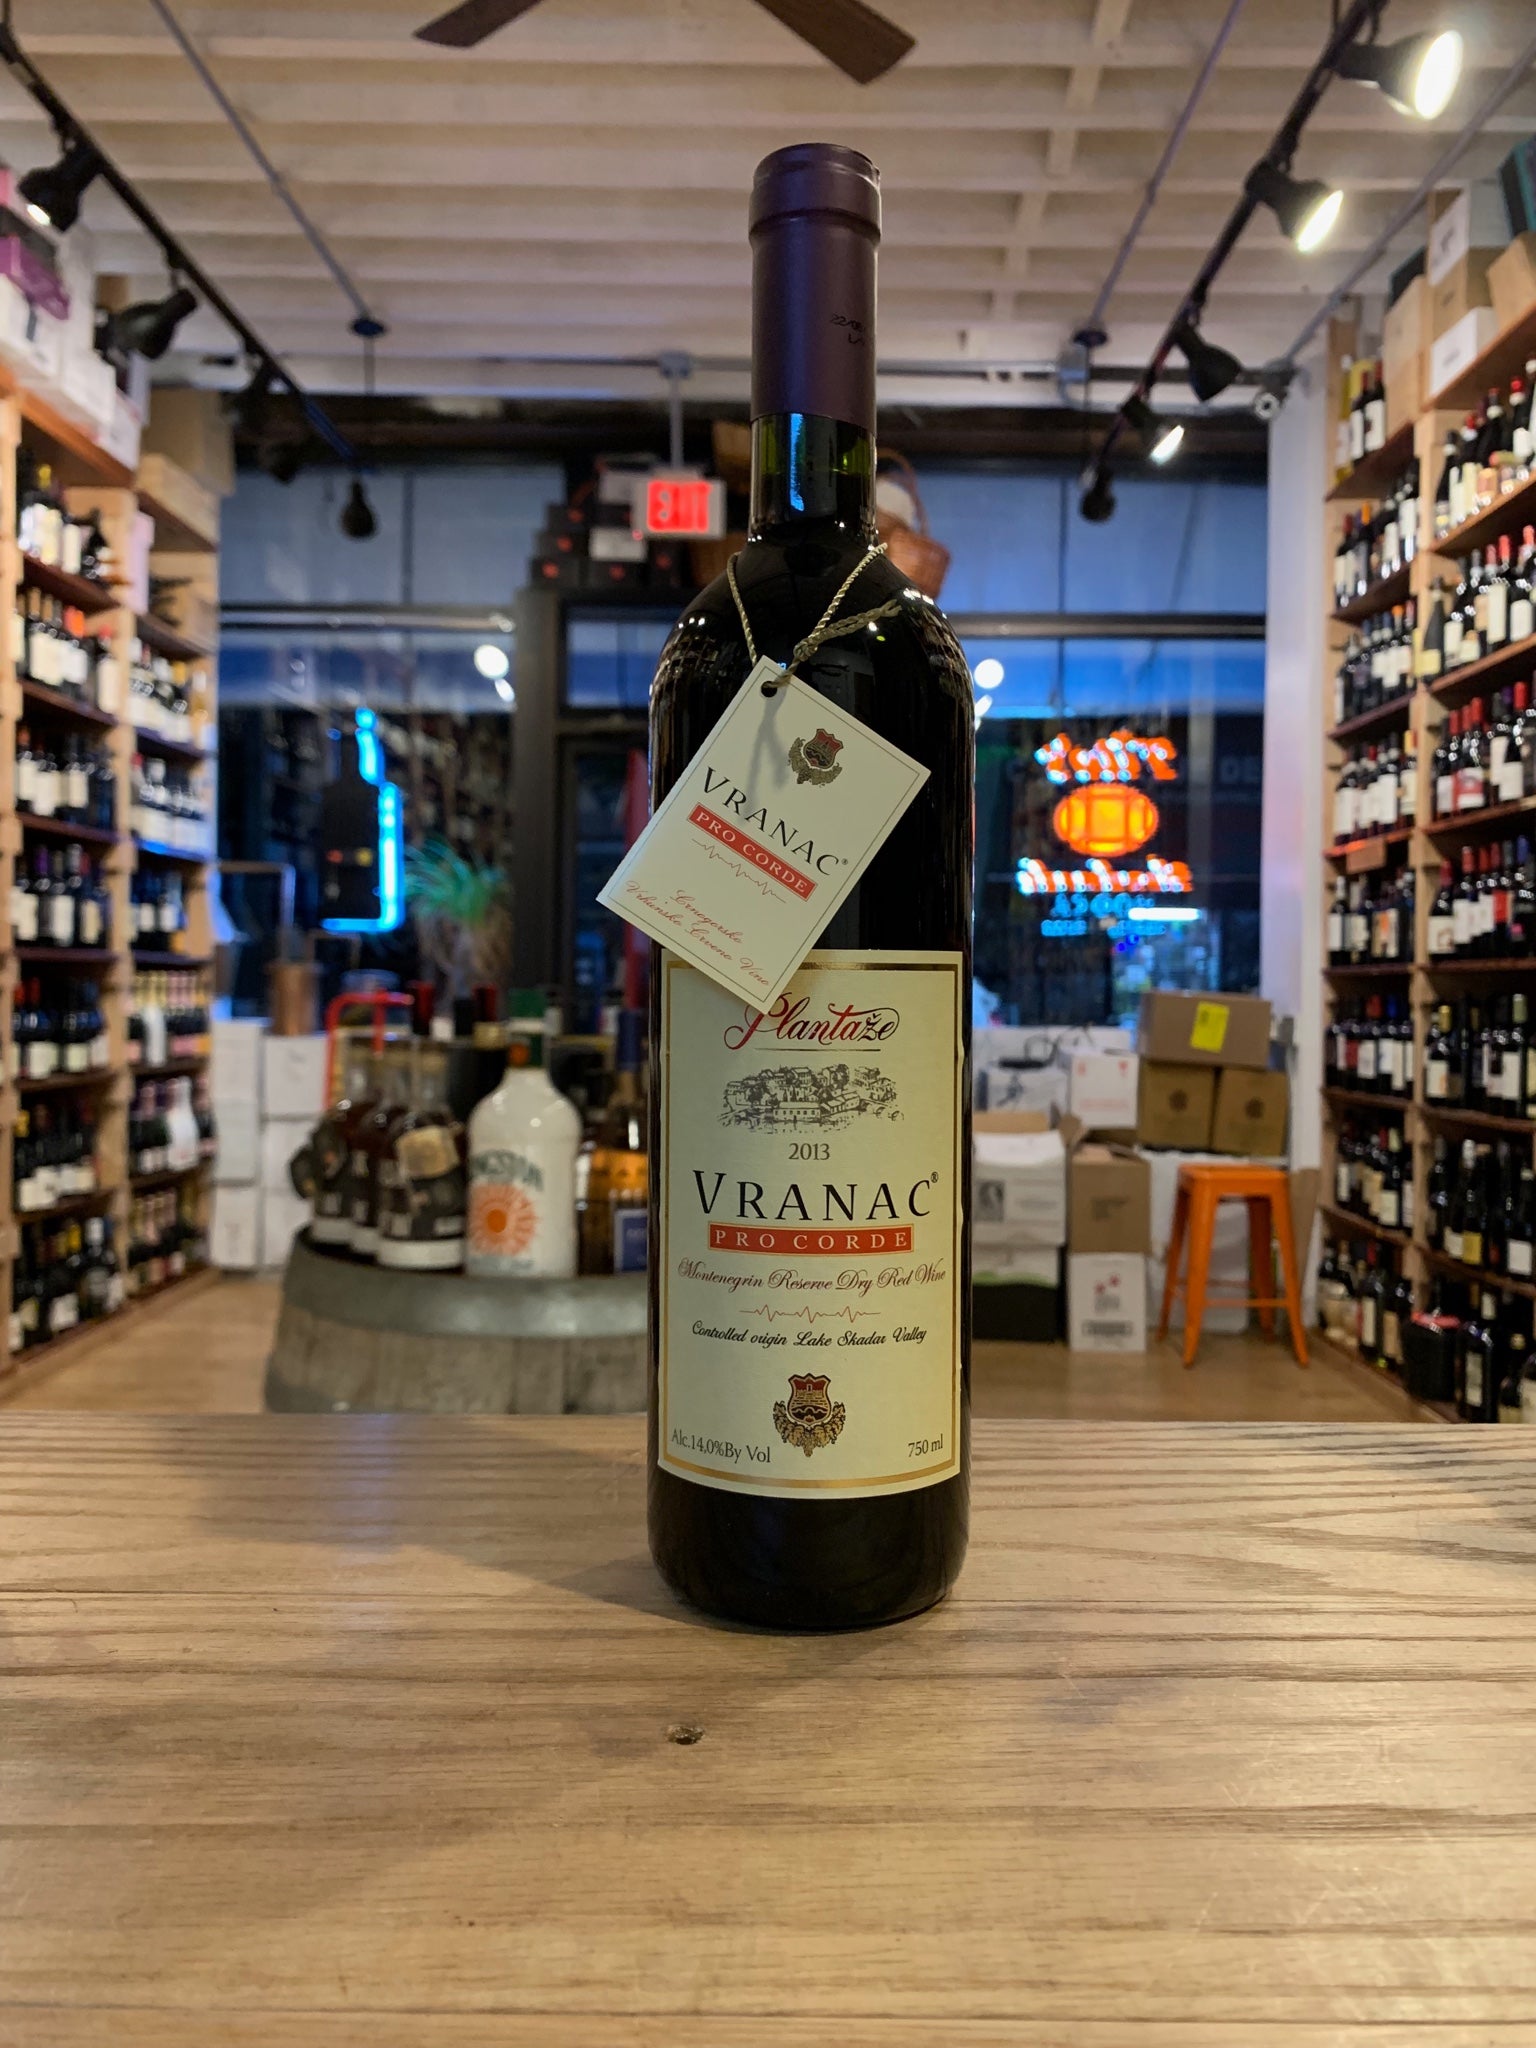 Plantaze Vranac Pro Corde 750mL a dark glass wine bottle with a beige label and purple top